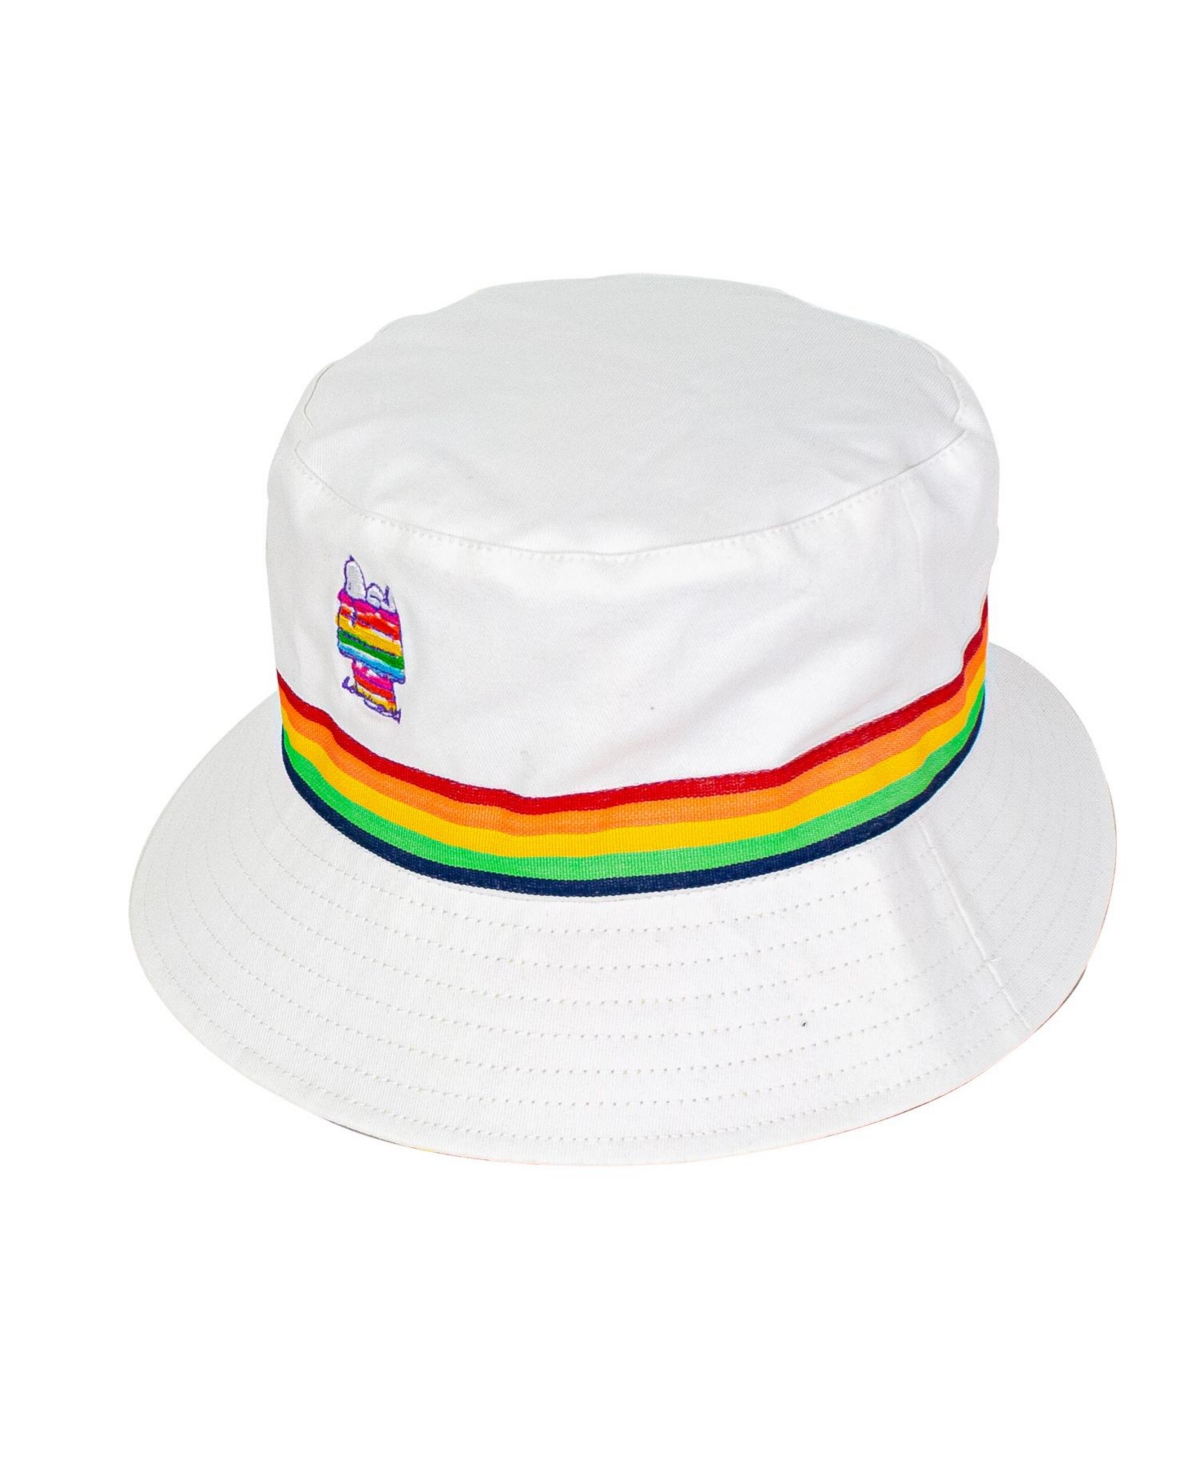 Rainbow House Bucket Peanuts Bucket Hat - White